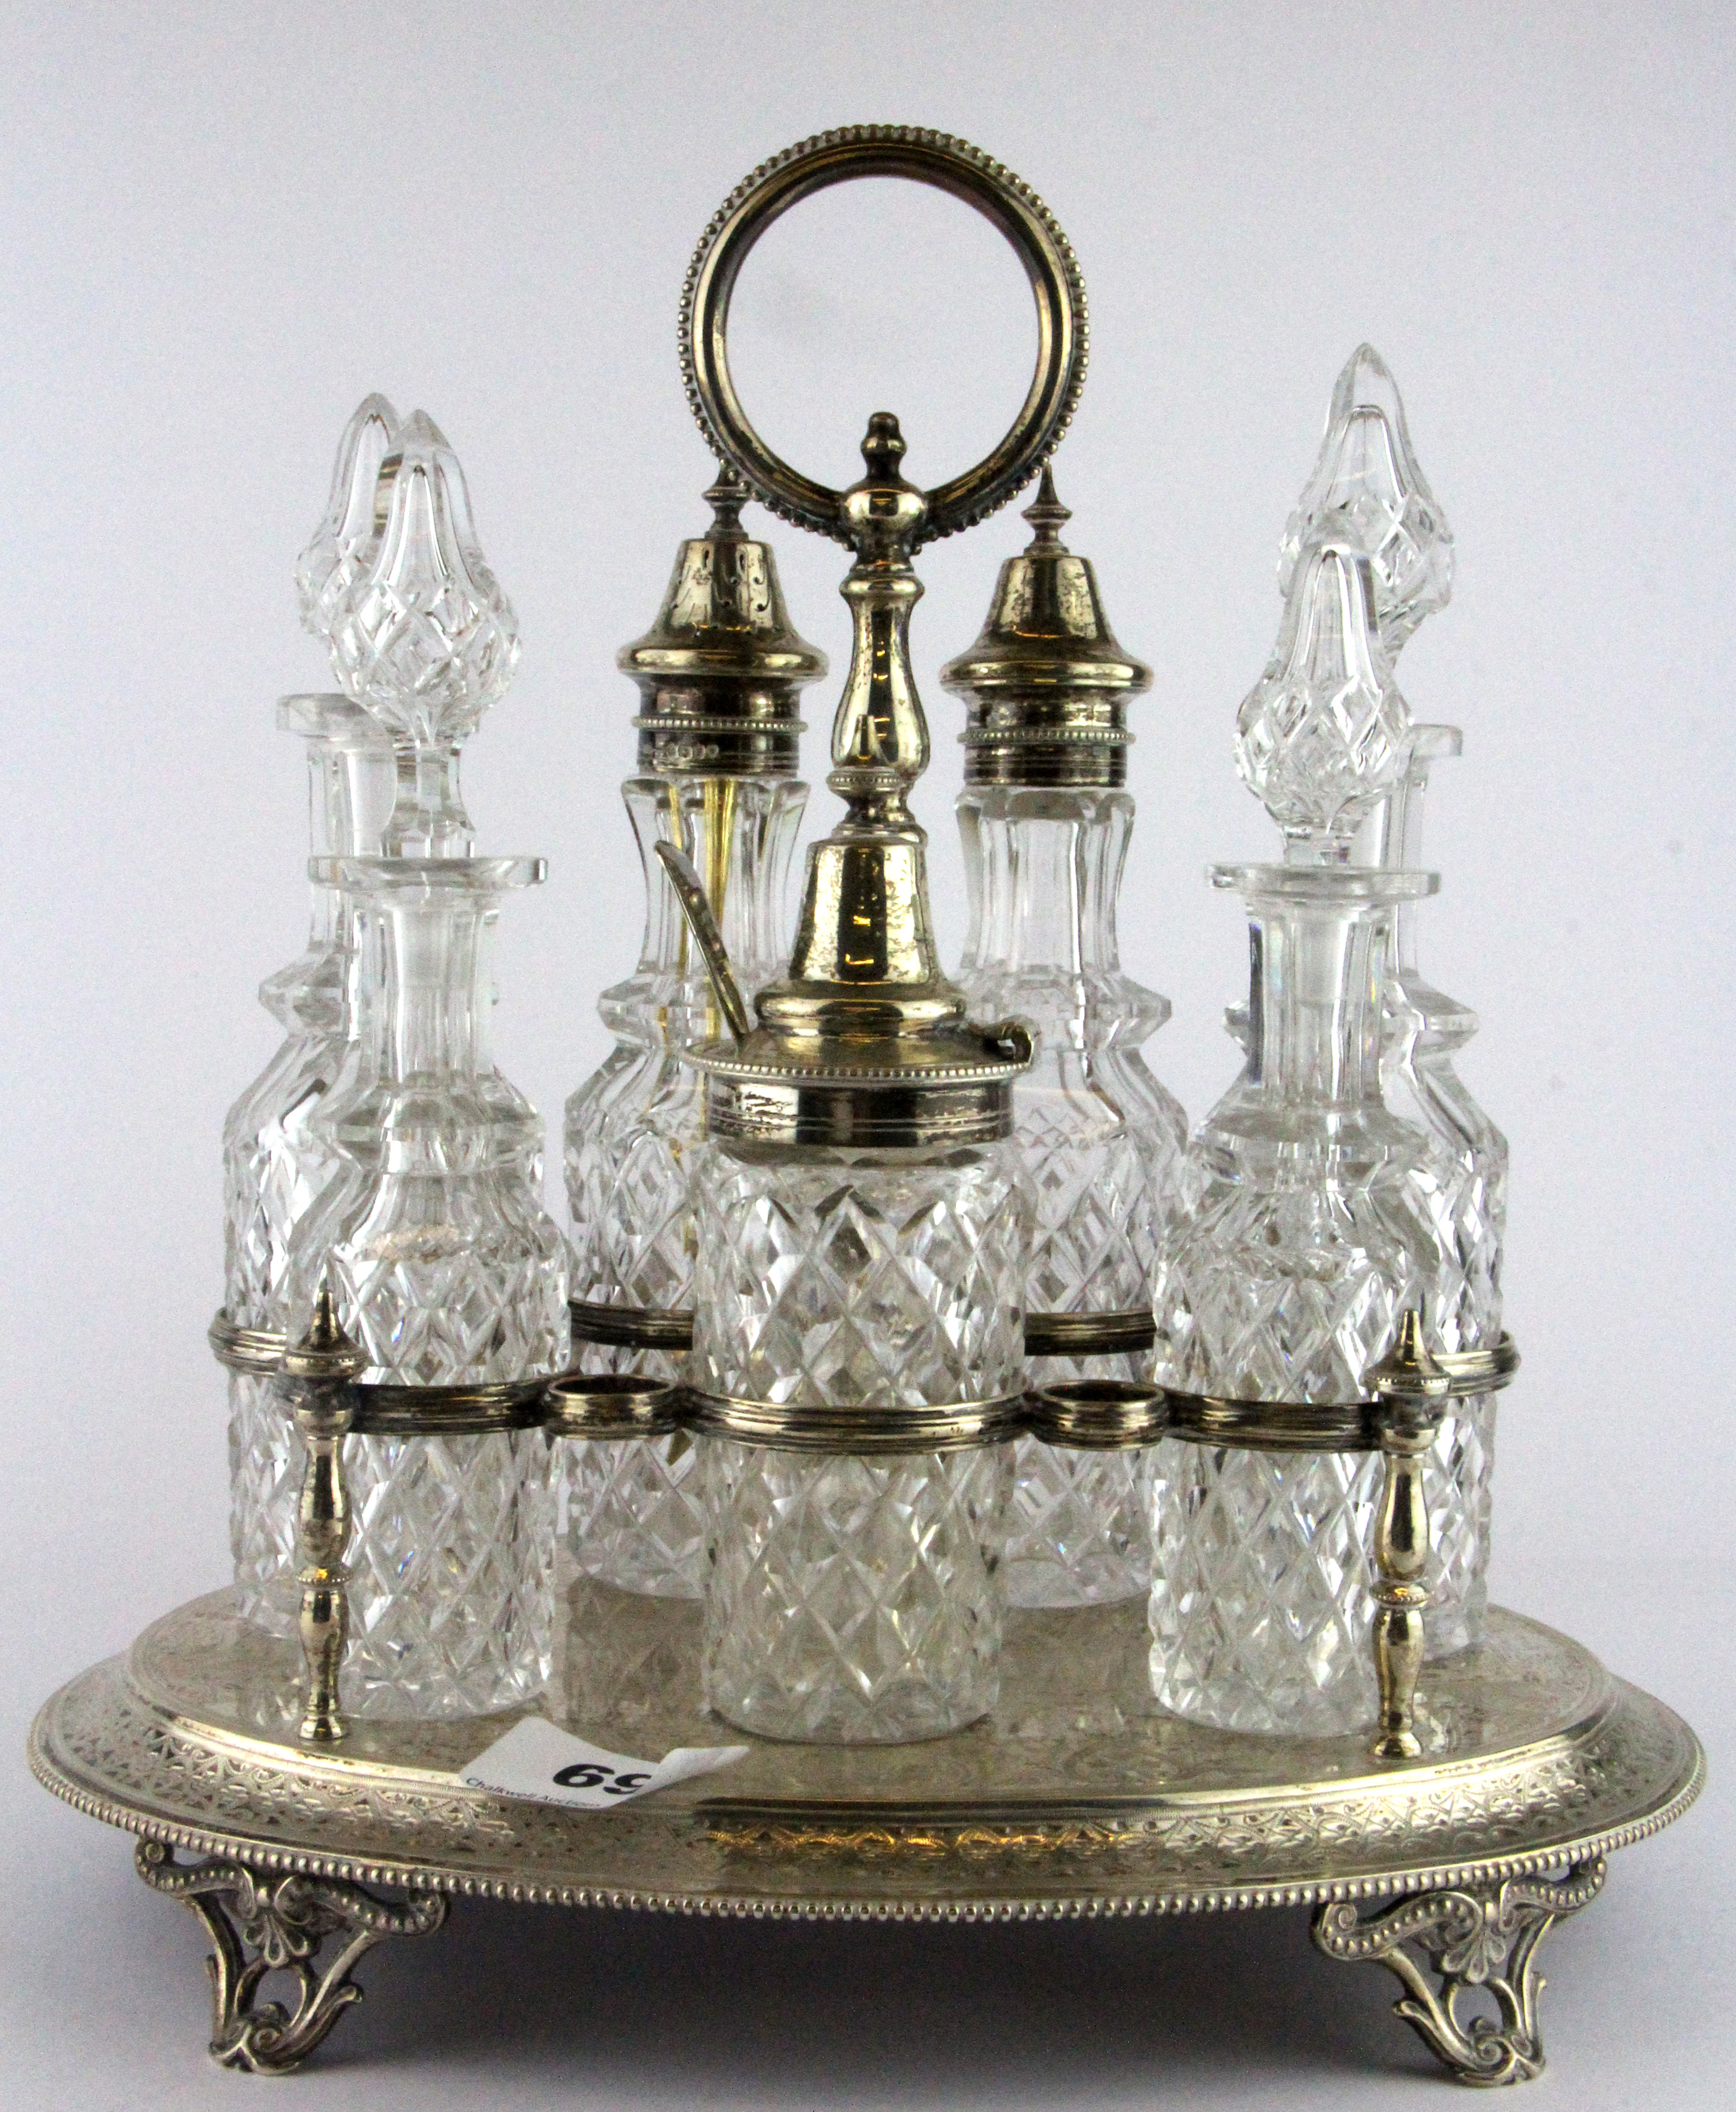 A superb hallmarked silver and cut glass seven bottle Victorian cruet set, W. 27cm H. 28cm. (In